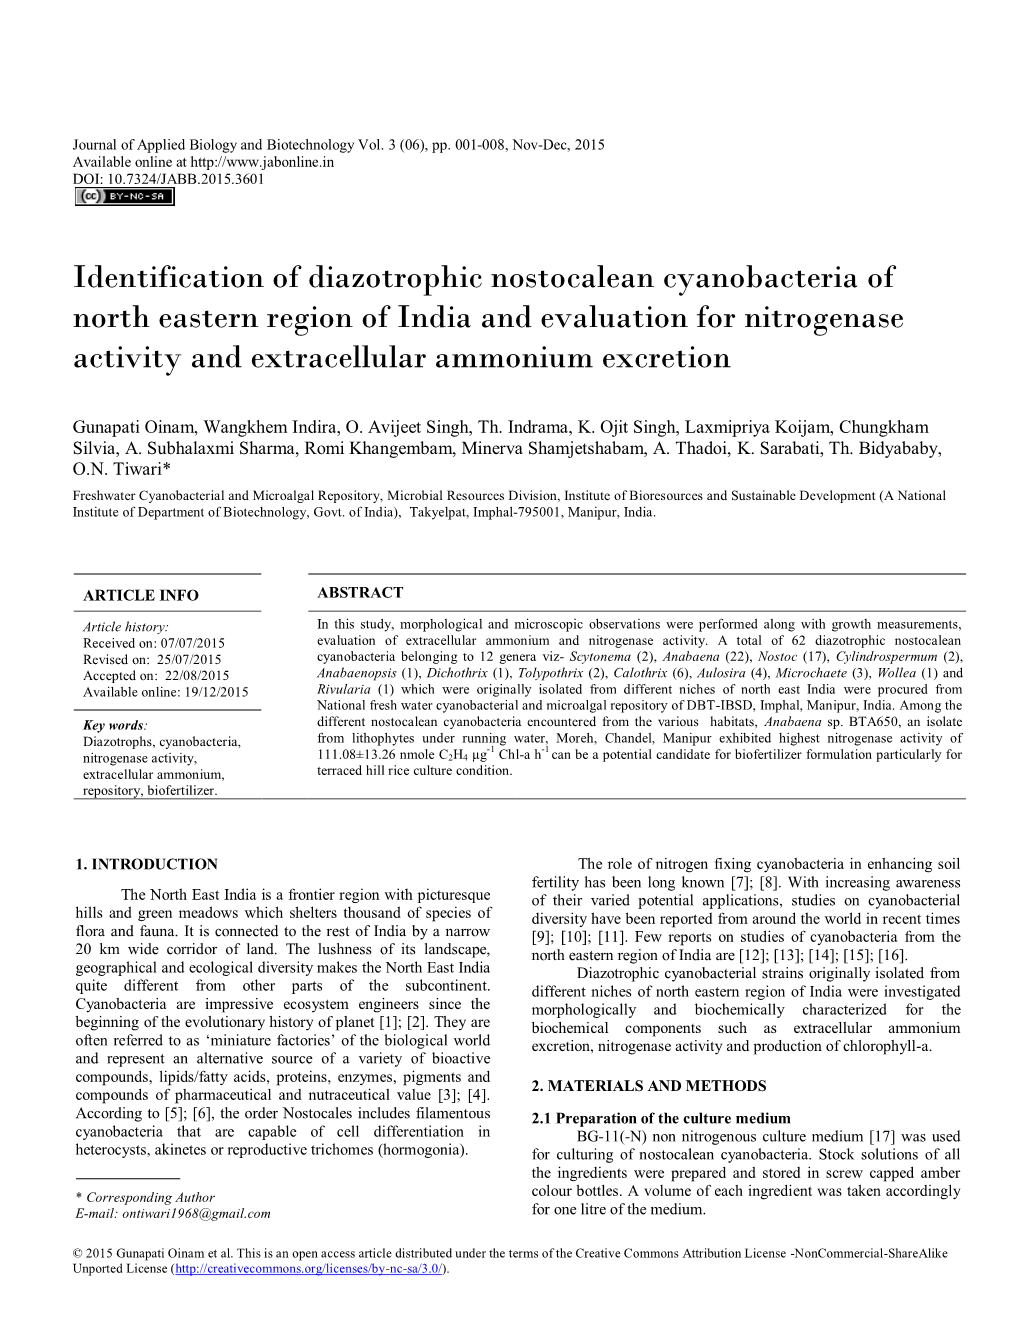 Identification of Diazotrophic Nostocalean Cyanobacteria of North